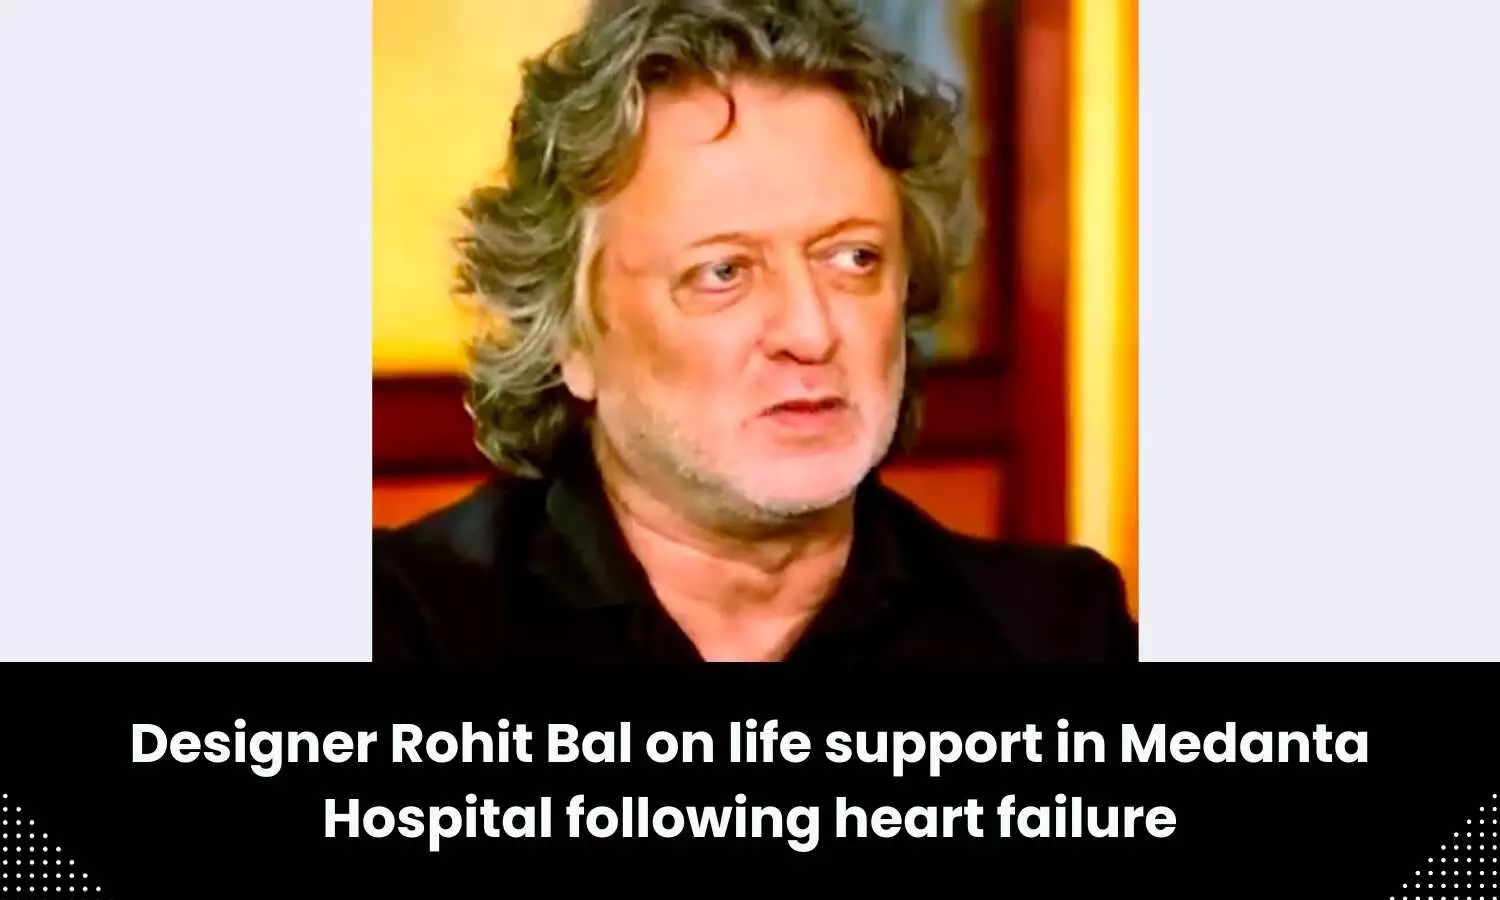 Designer Rohit Bal on life support at Medanta Hospital following heart failure